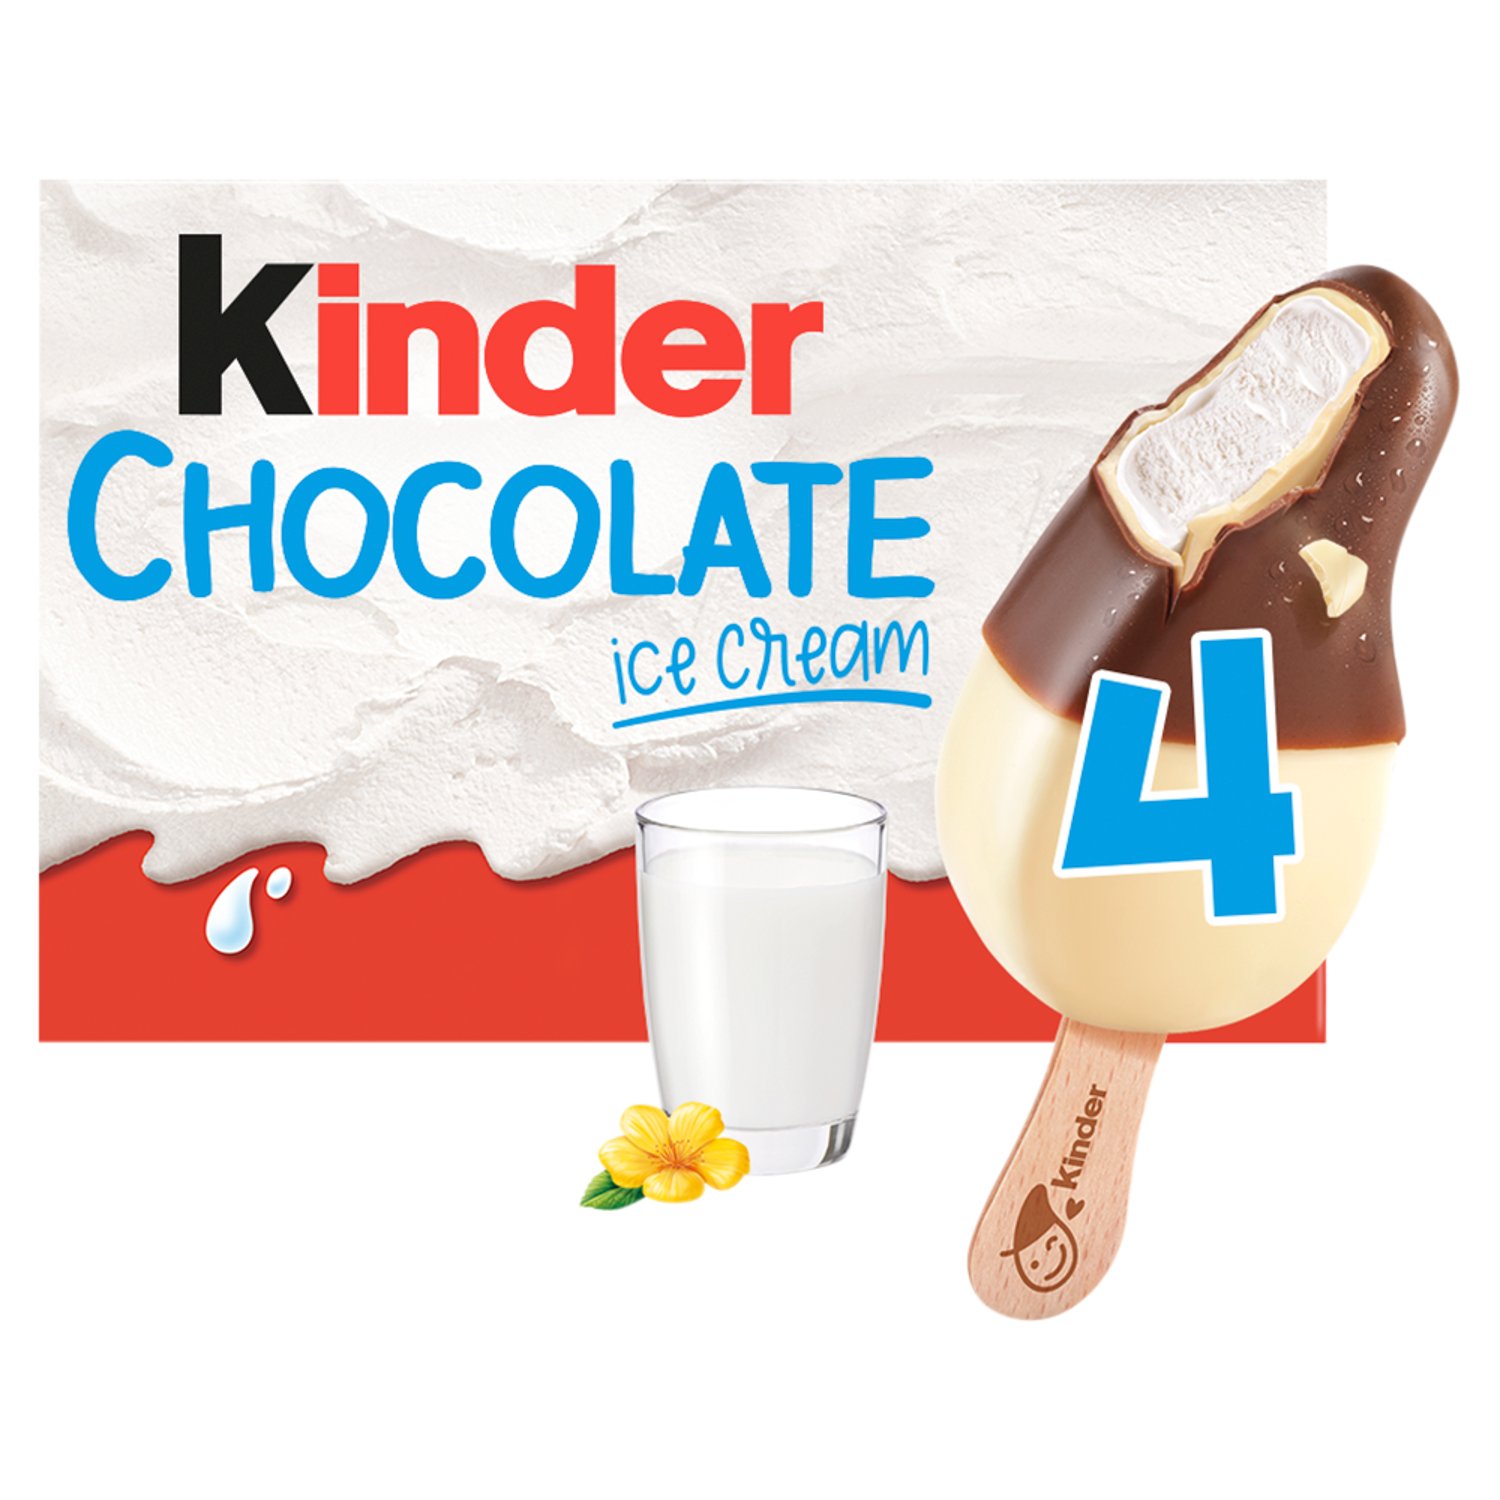 Kinder Chocolate Ice Cream Stick 4 Pack (38 g)